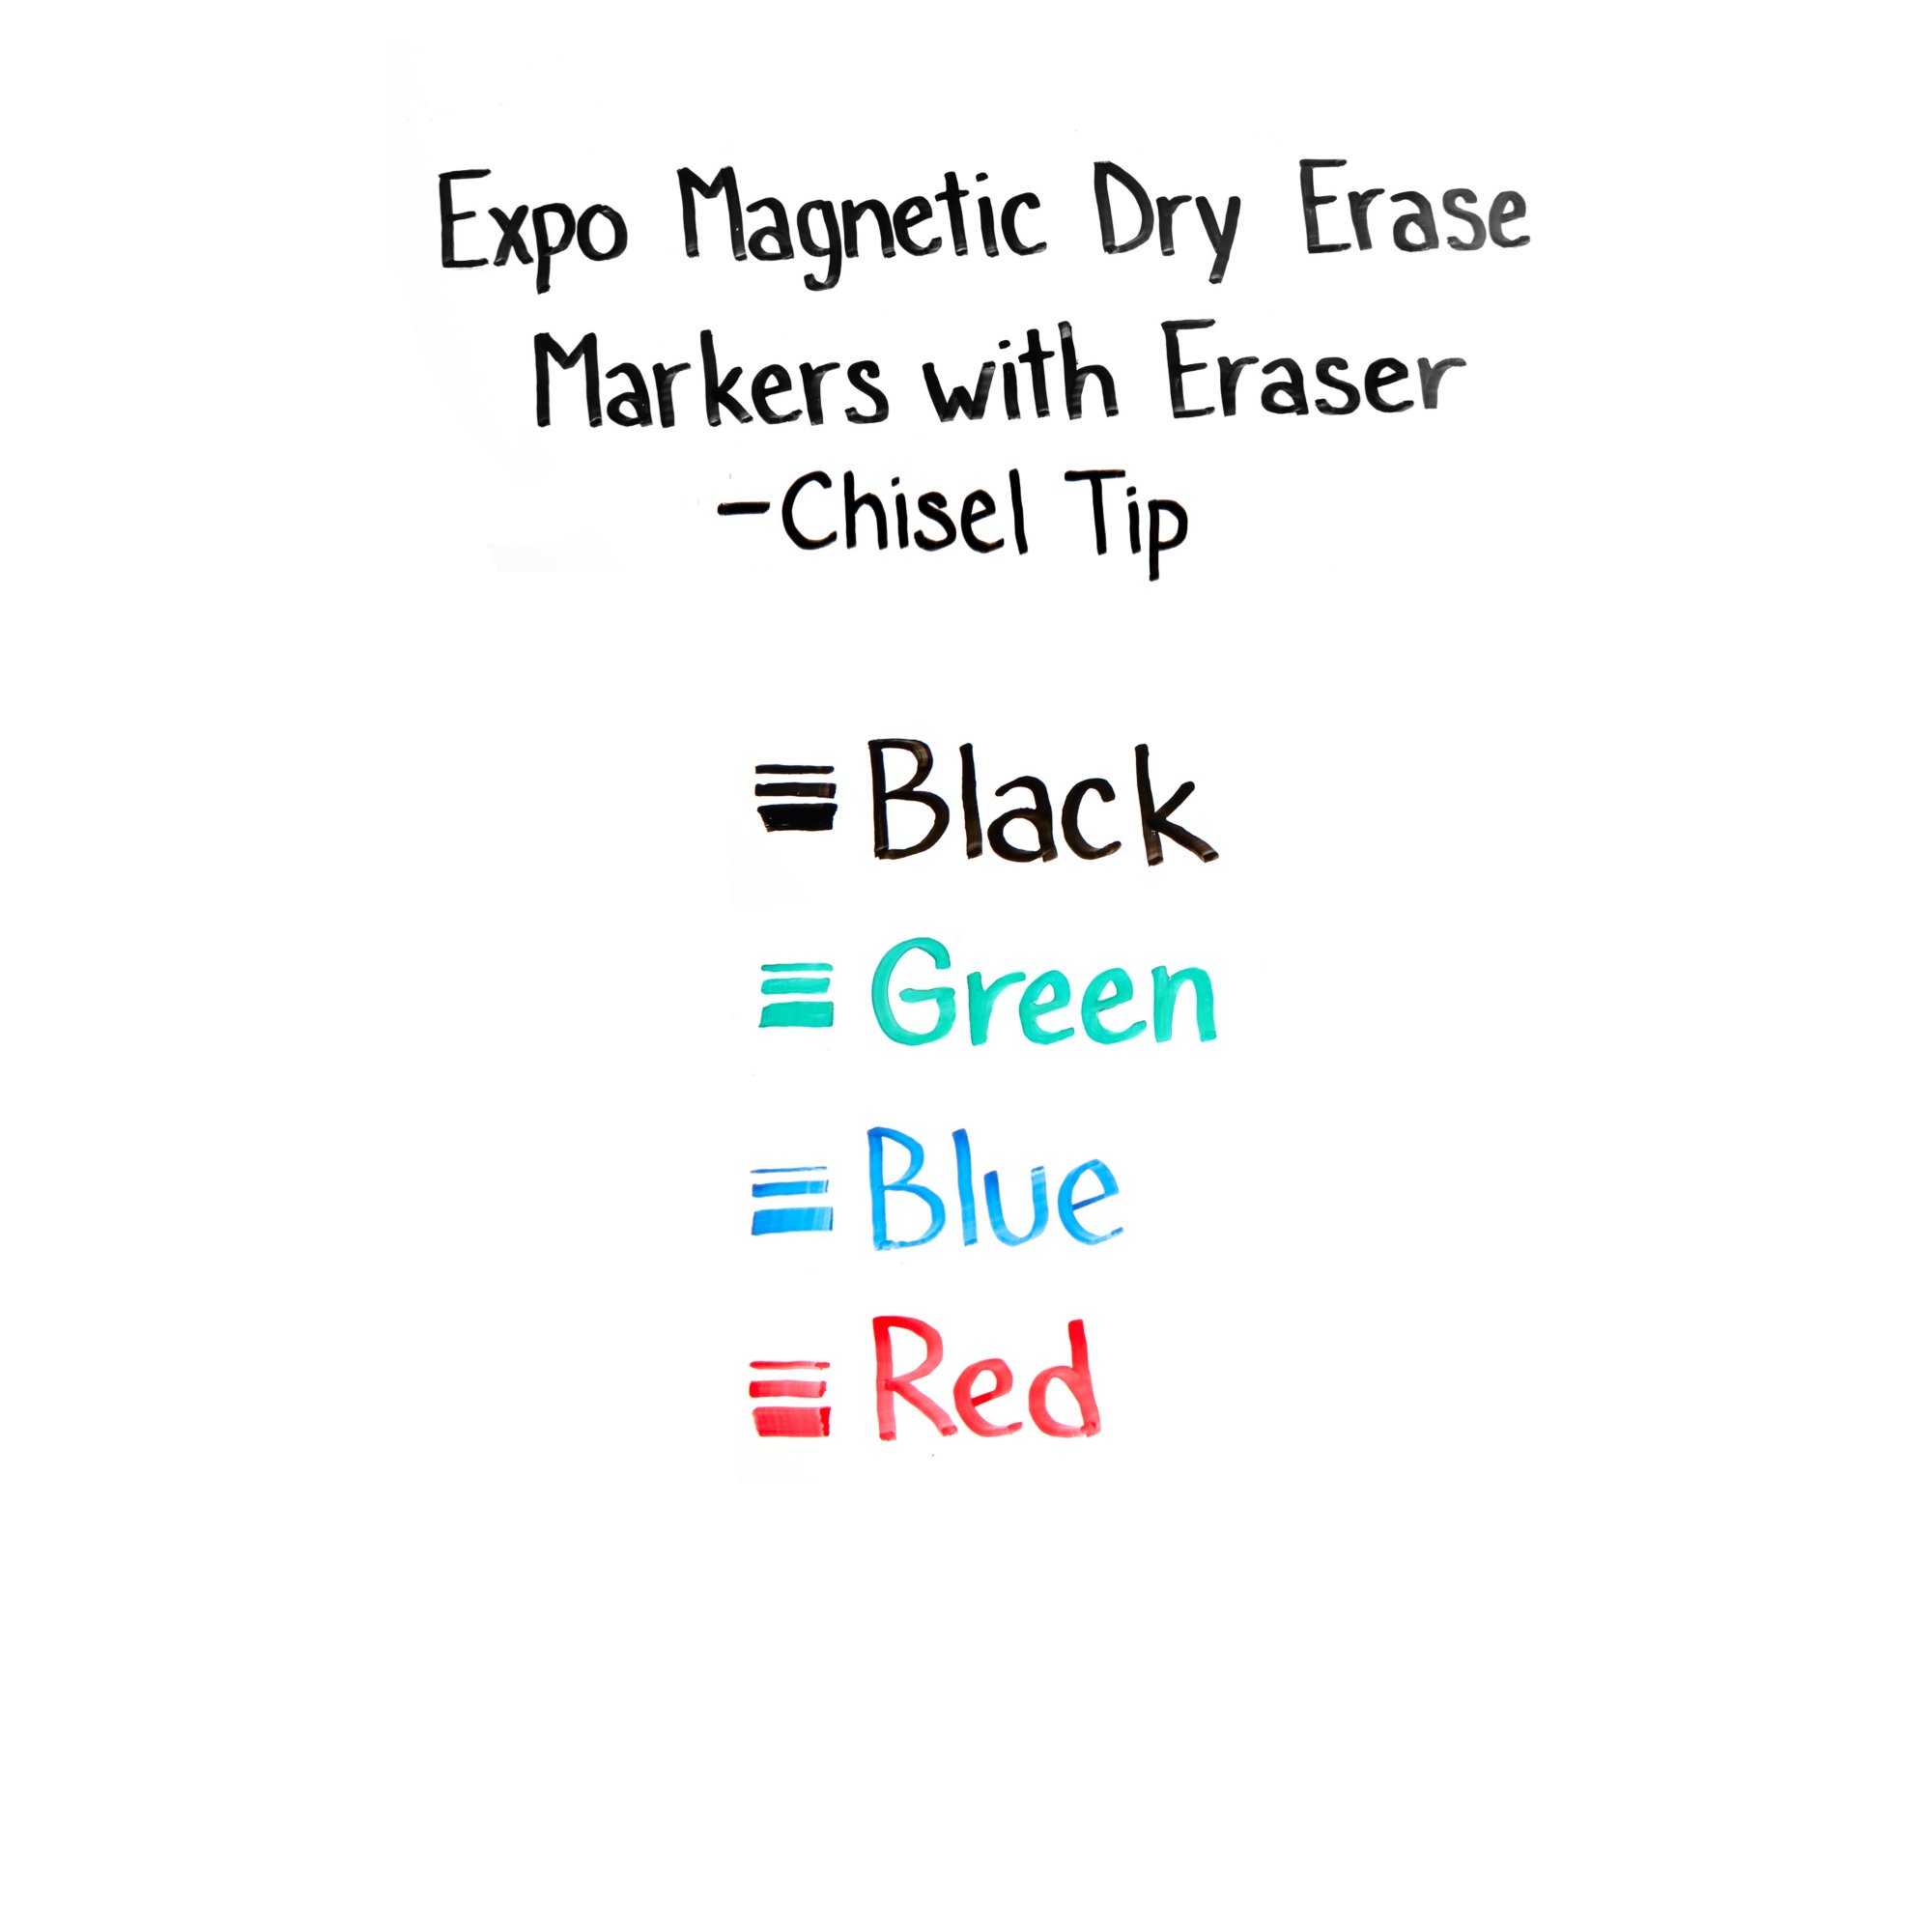 Details about   EXPO Magnetic Clip Eraser w/2 Markers Fine Black/Blue 1 Set 1802768 